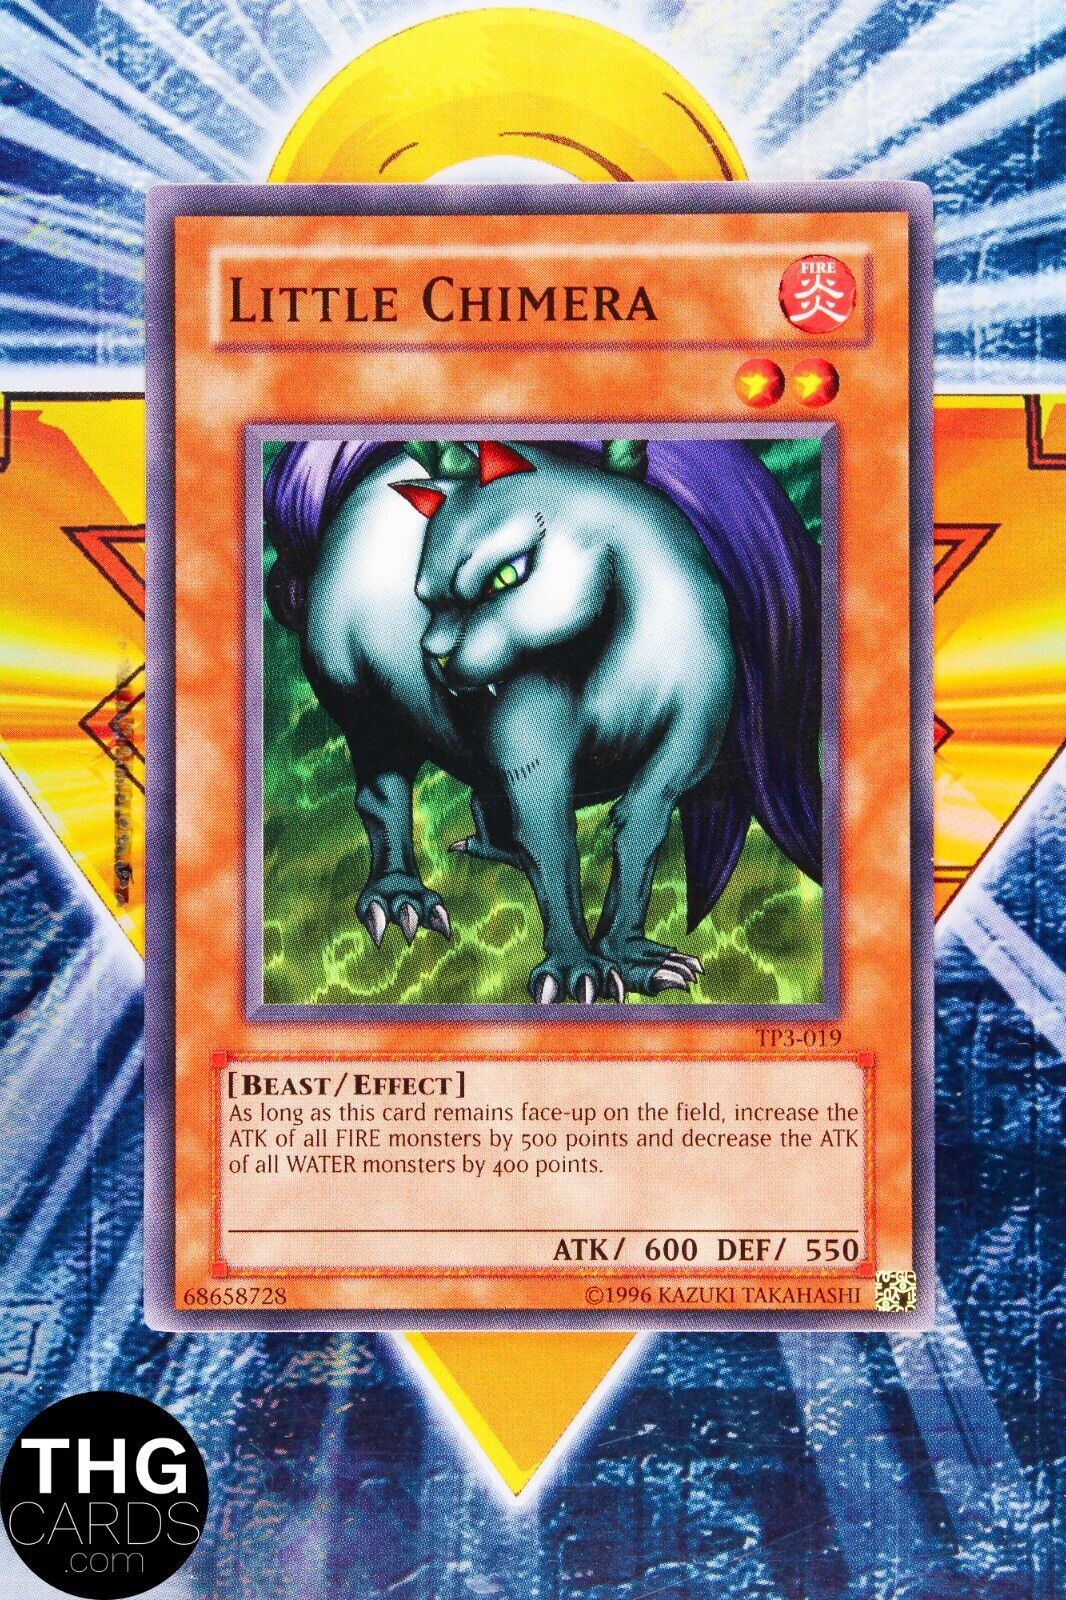 Little Chimera TP3-019 Common Yugioh Card